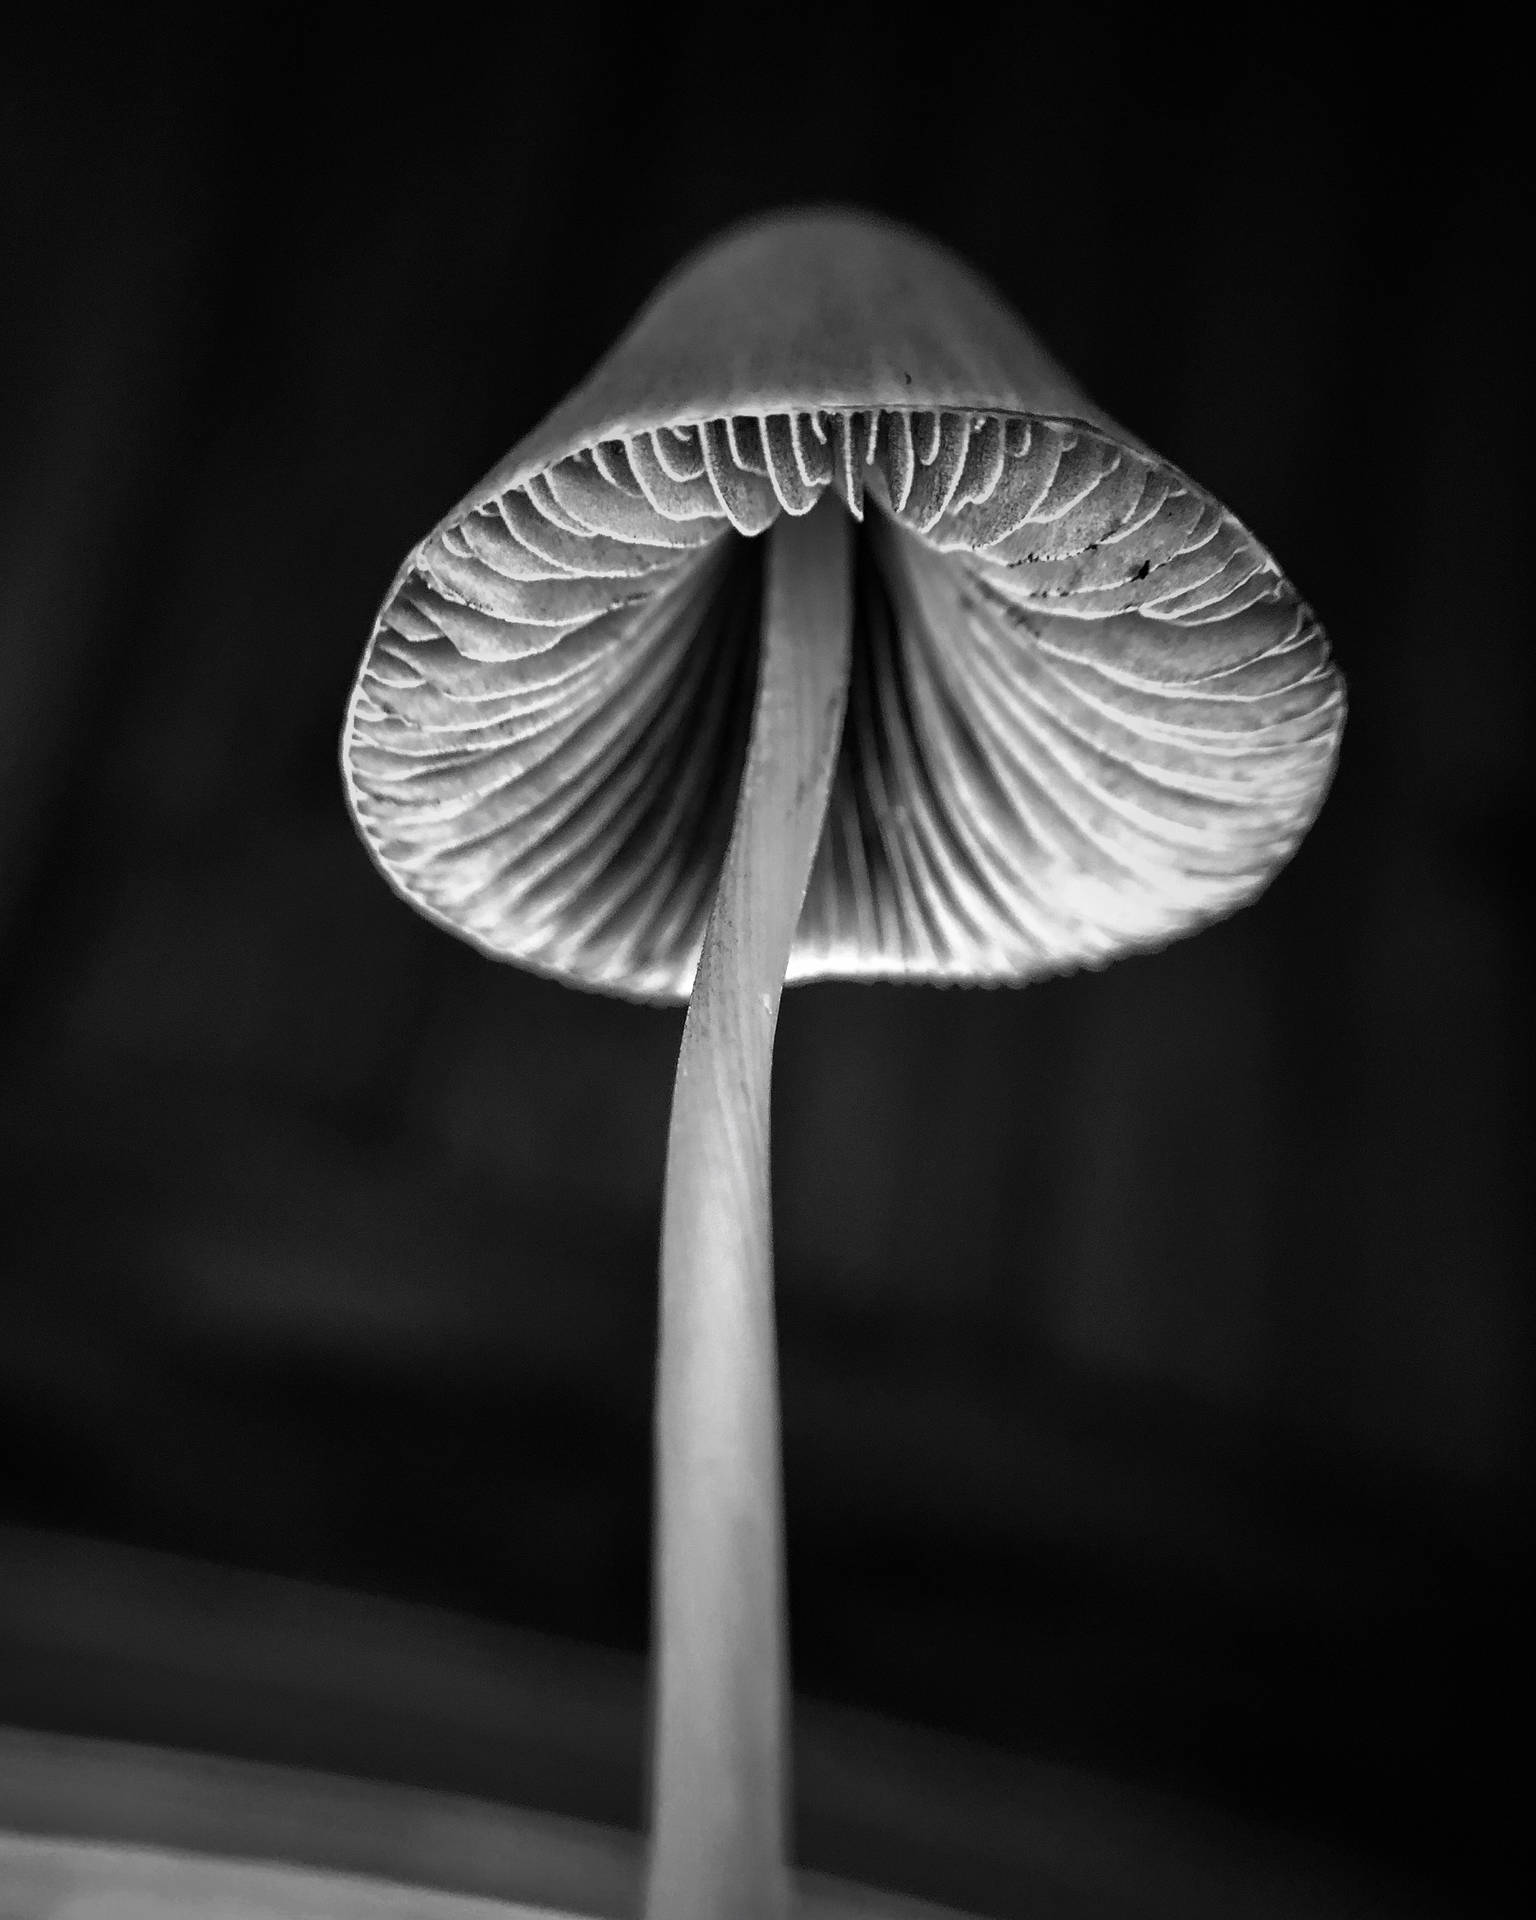 Grayscale Mushroom Aesthetic Background